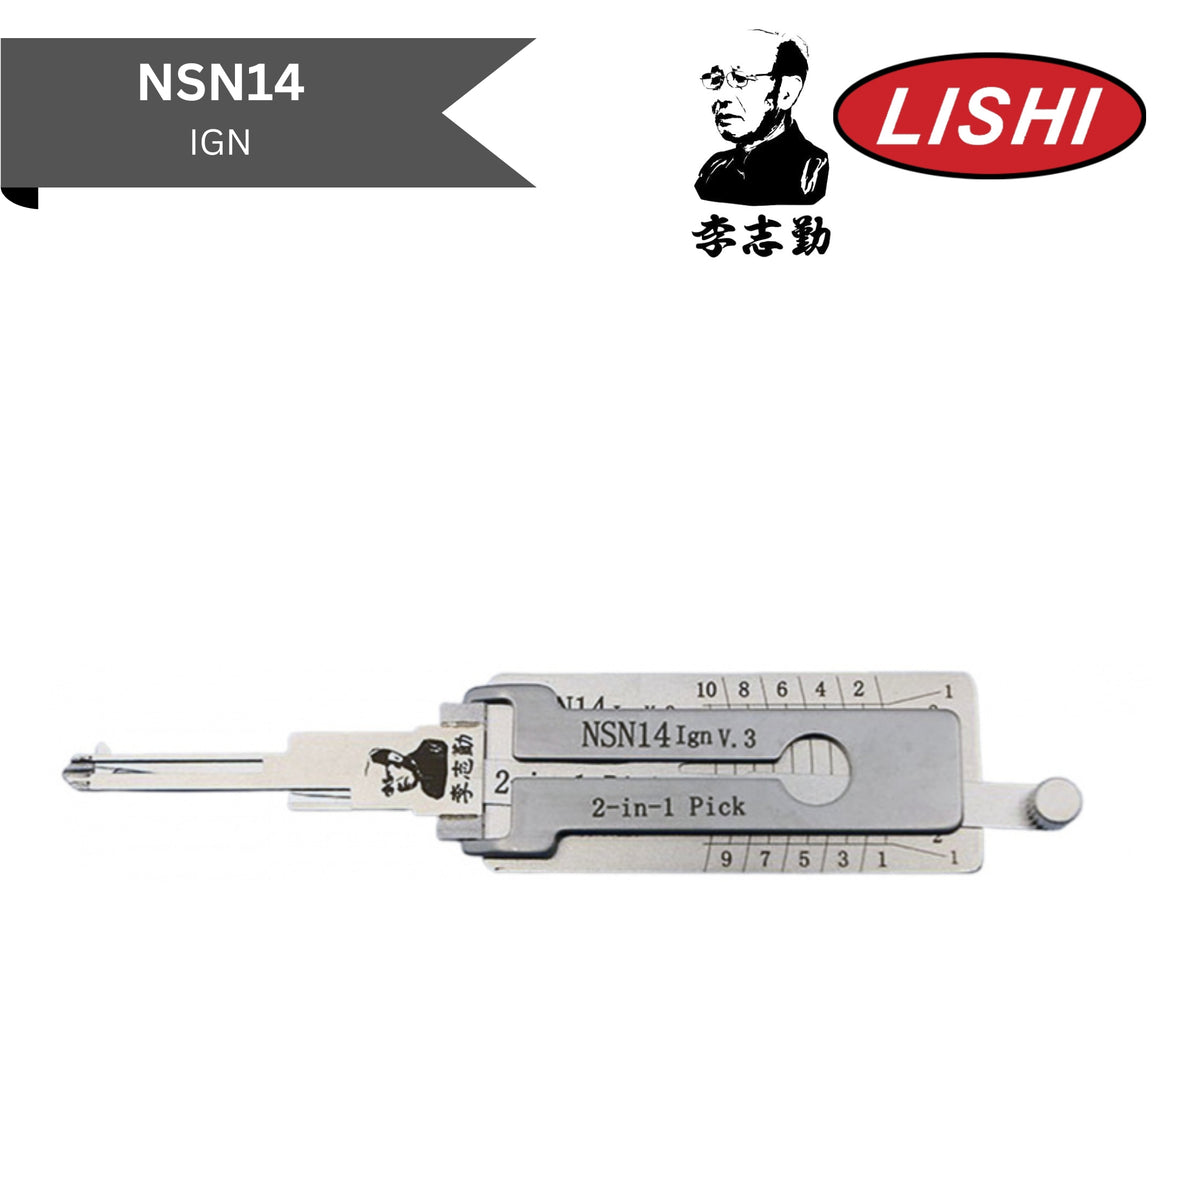 Original Lishi - Nissan NSN14 (V.3)- 2-In-1 Pick/Decoder - AG - Royal Key Supply